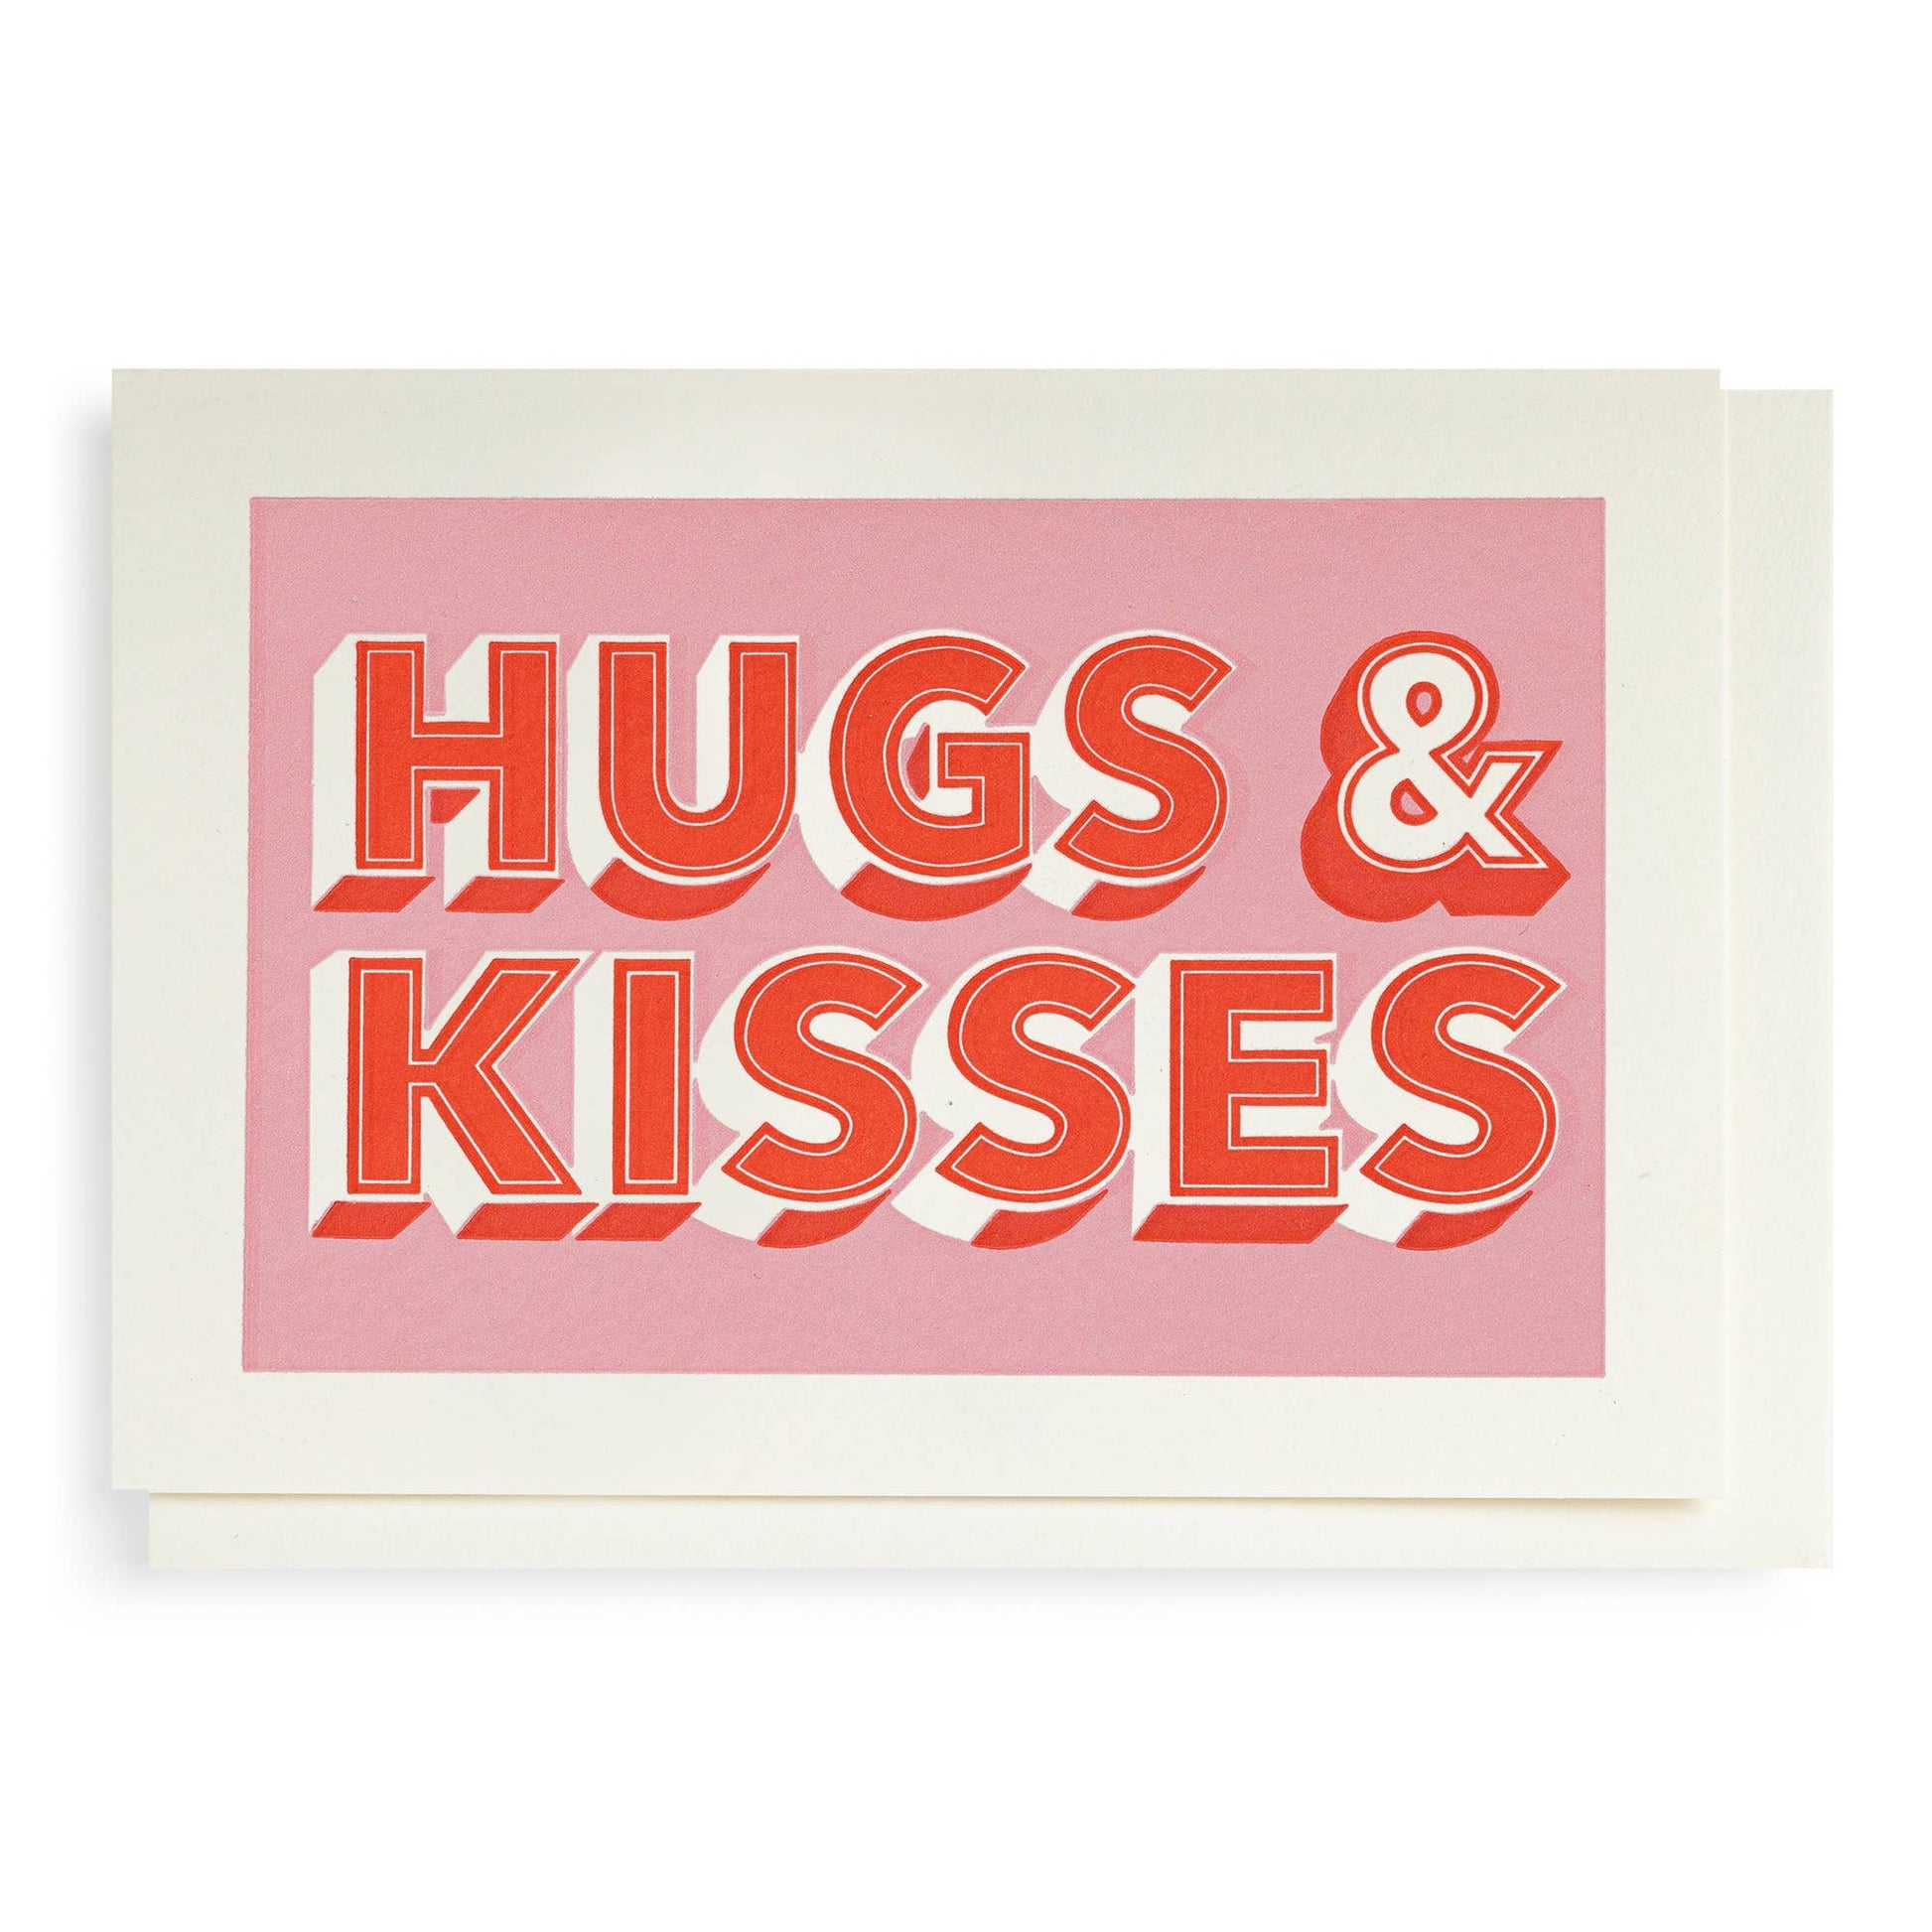 Hugs & Kisses Notelet Card  Archivist Gallery   